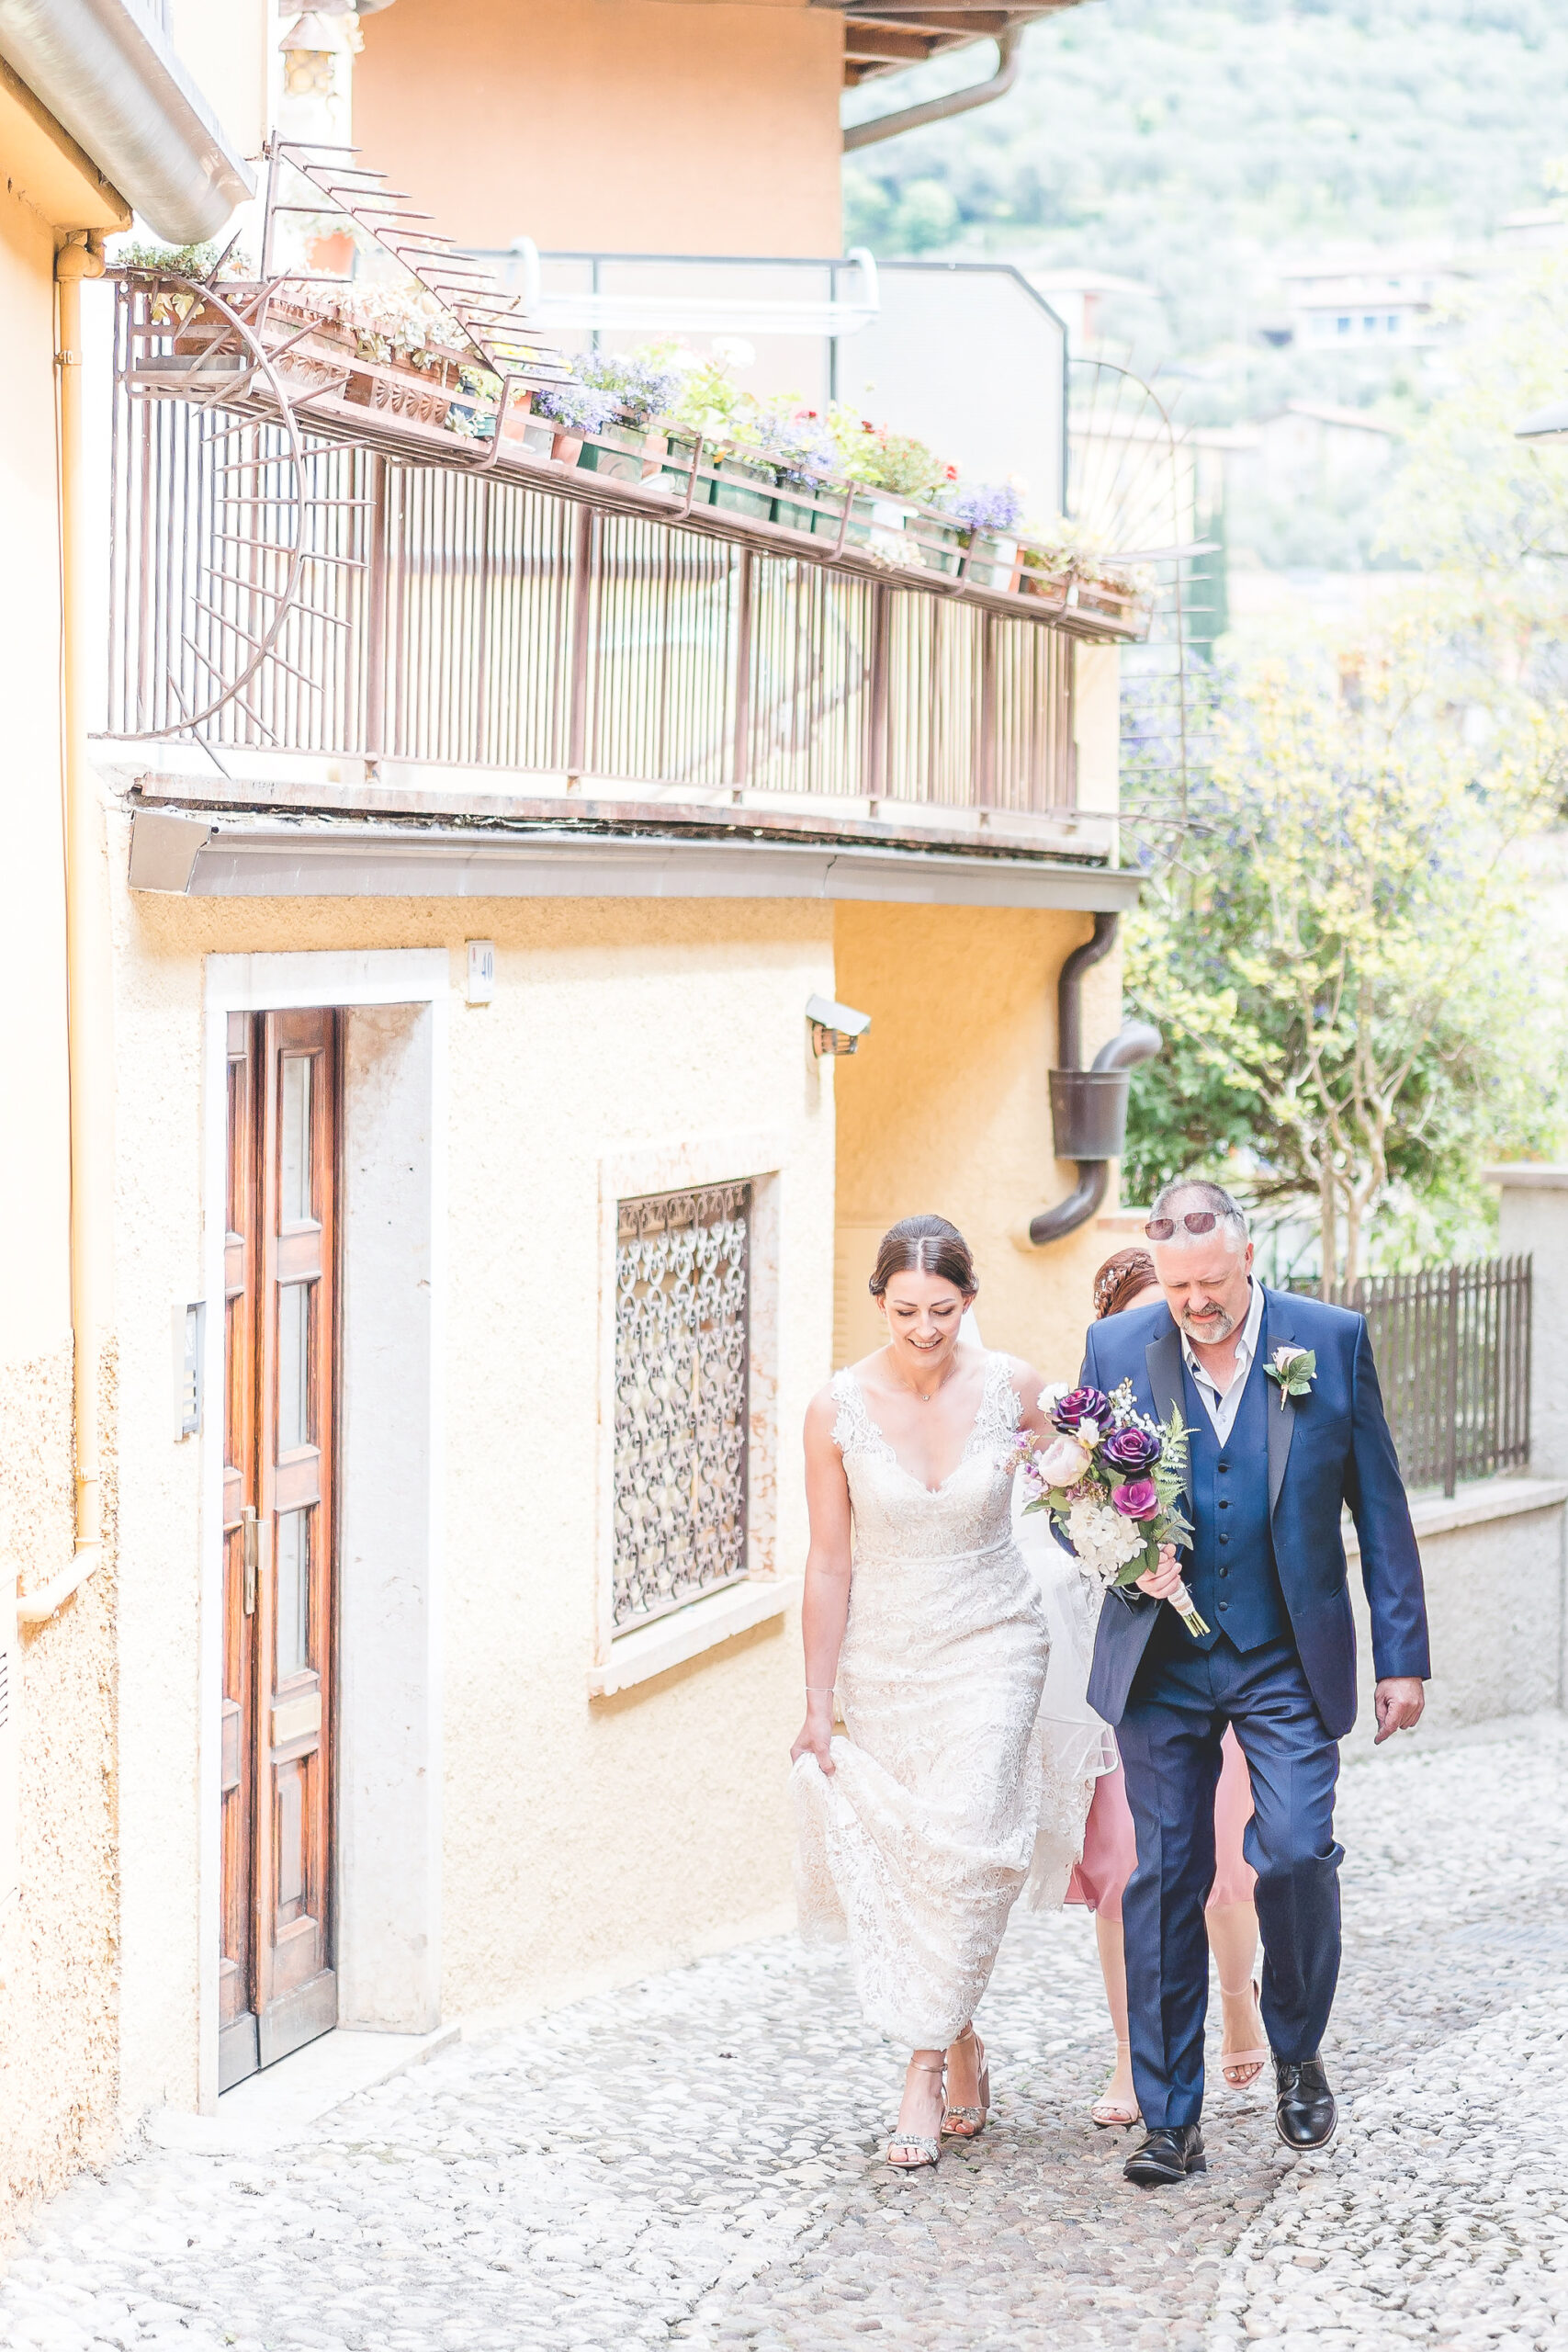 planning a destination wedding Italy 